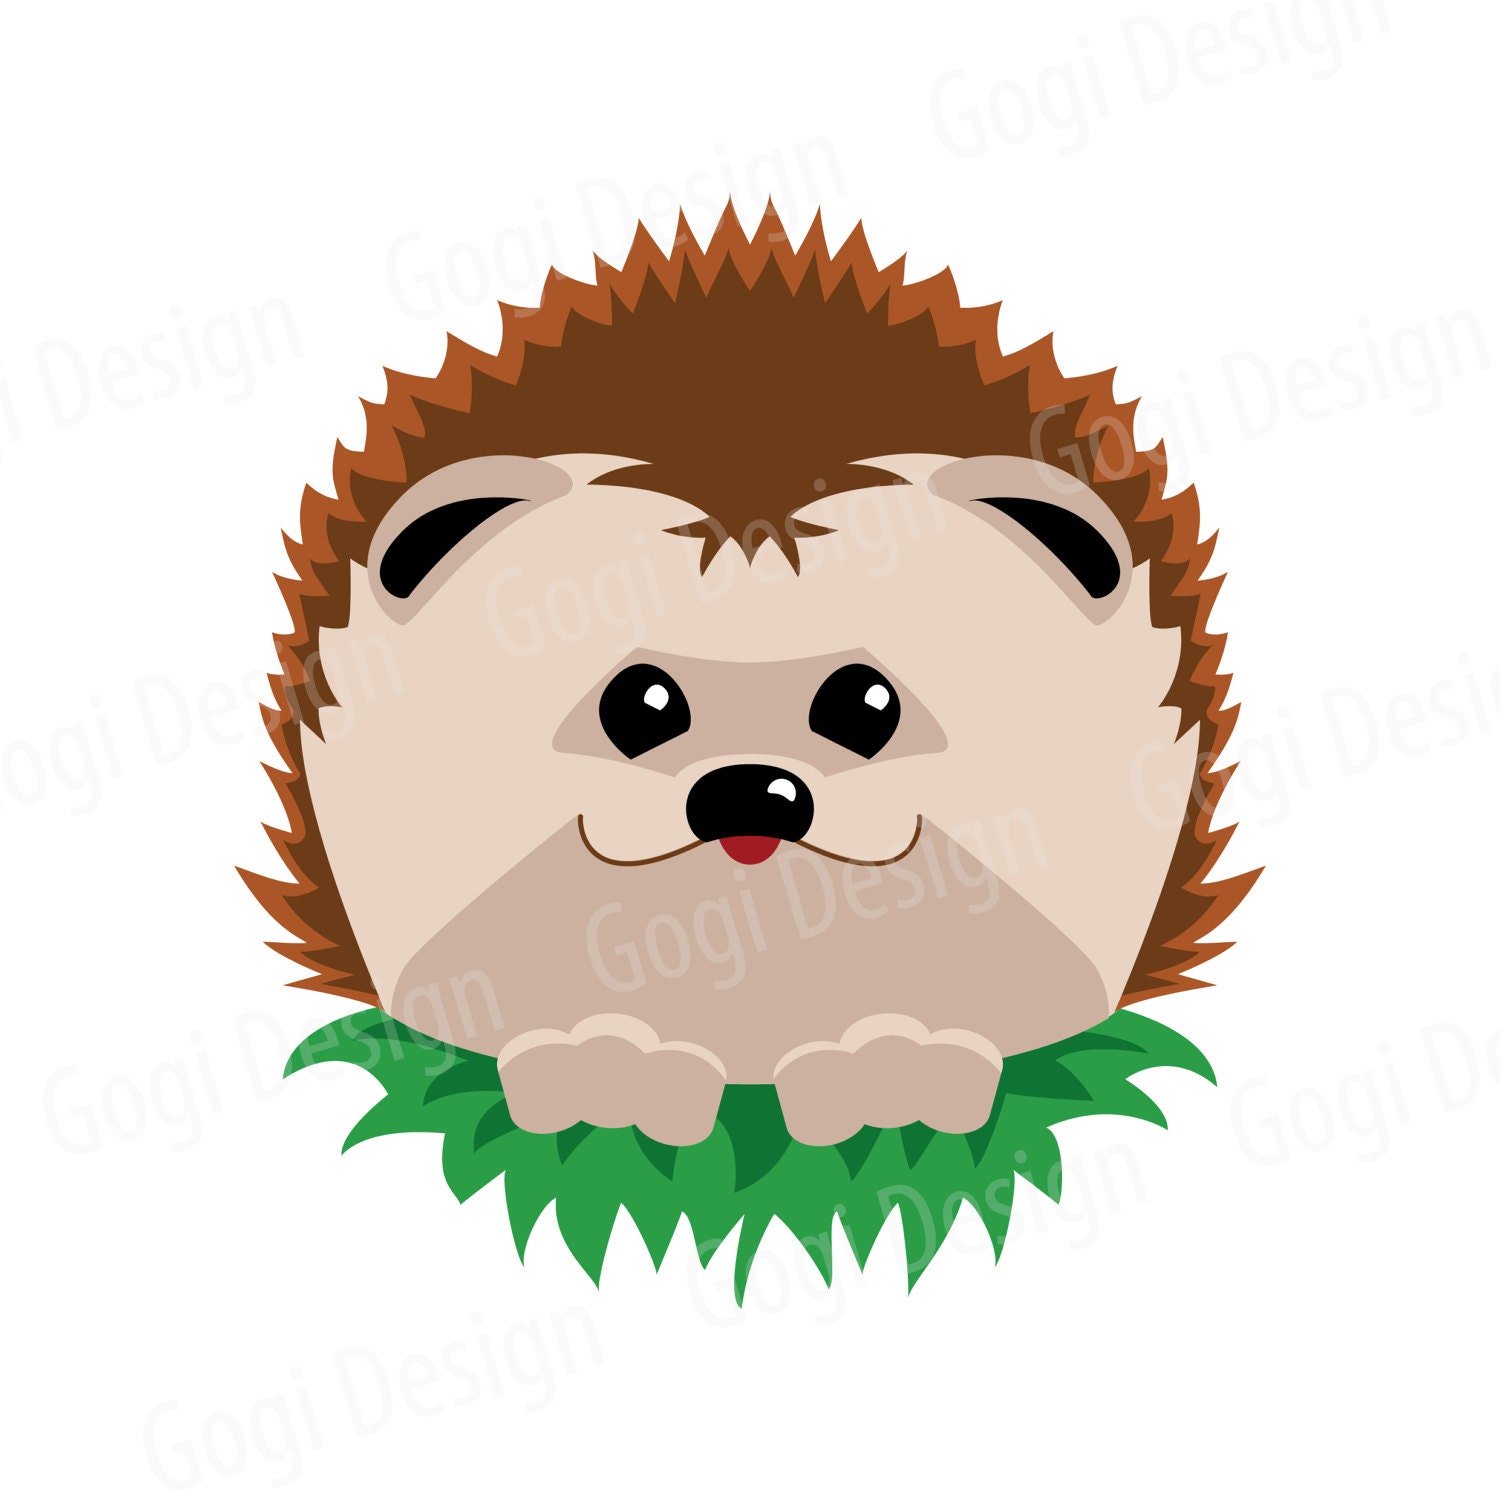 Cute hedgehog vector illustration on white background